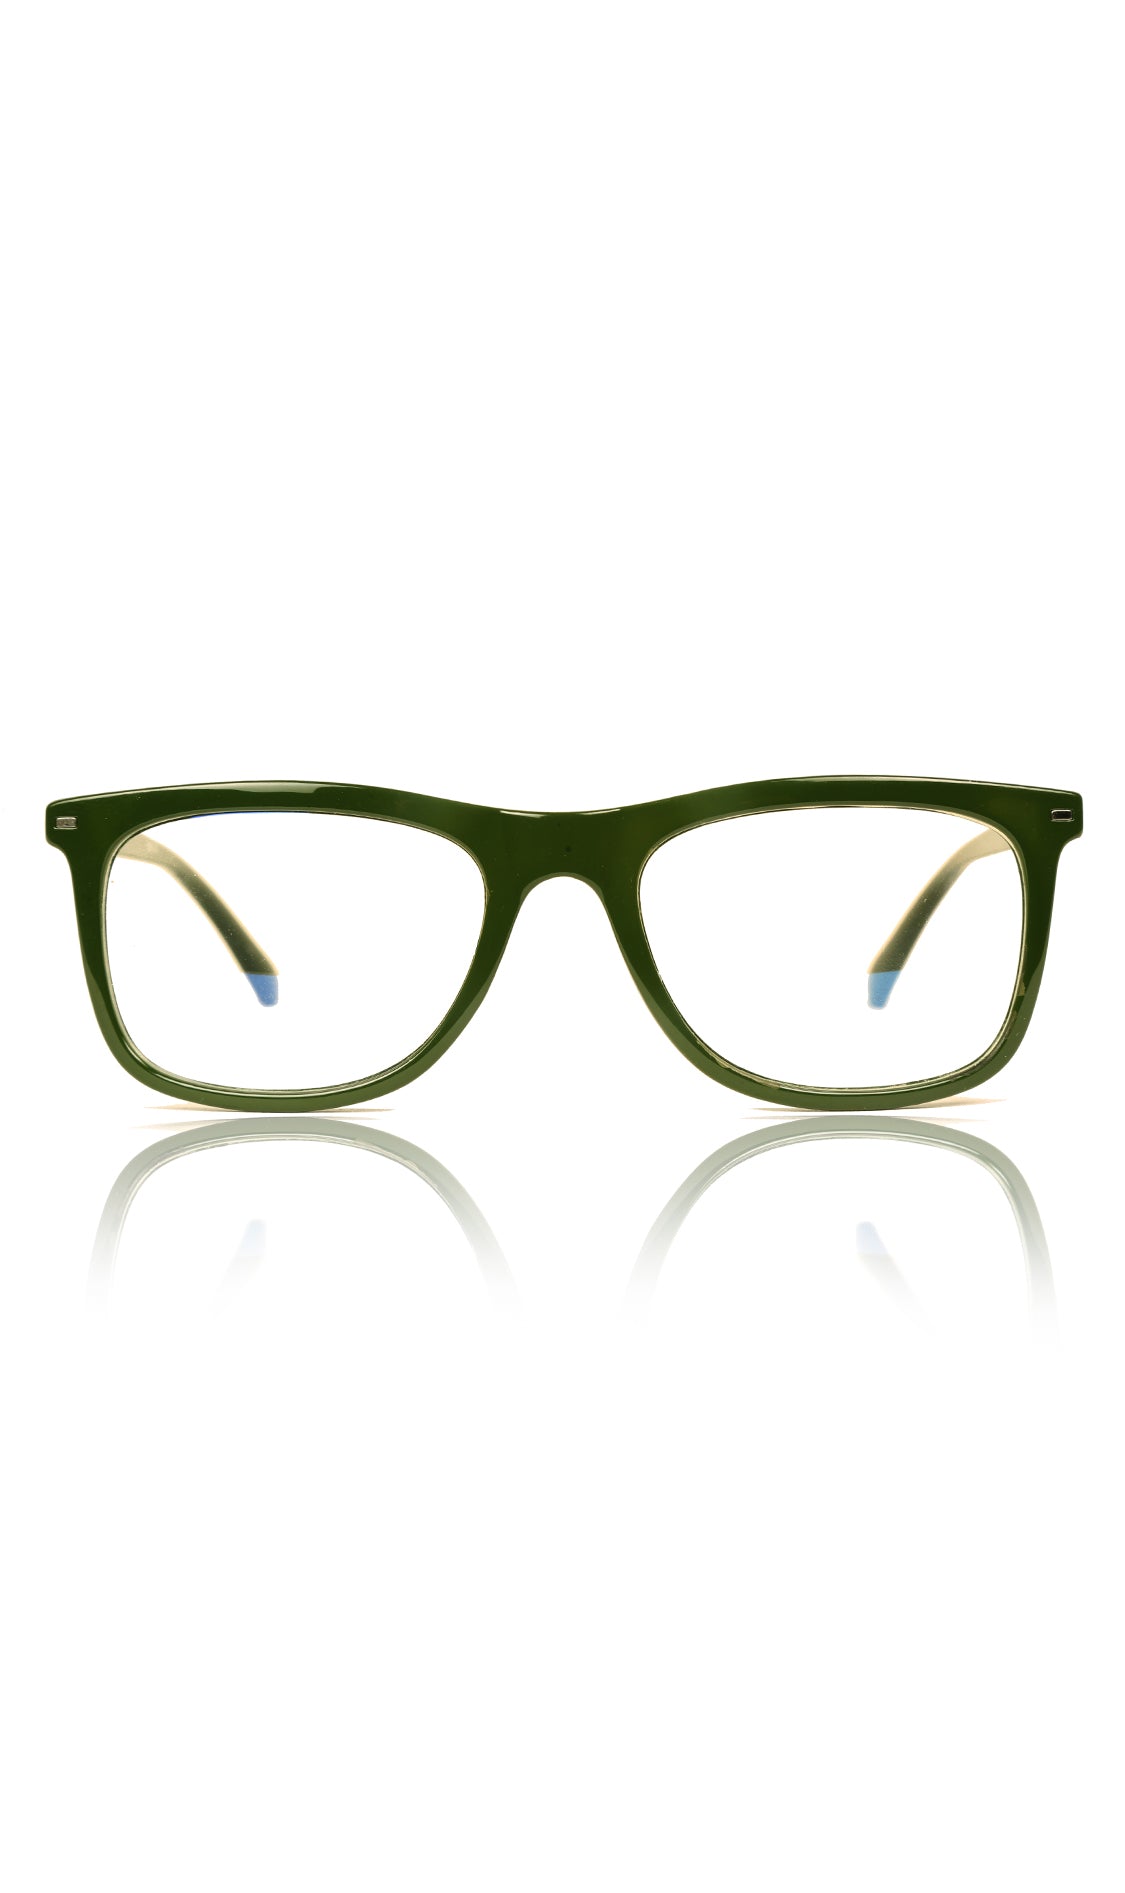 Jodykoes® Colour Frame Series Eyewears | Blue Rays Protection Wayfare Stylish Spectacles With Anti Glare Eyeglasses For Men and Women Eyewears (Leaf Green) - Jodykoes ®